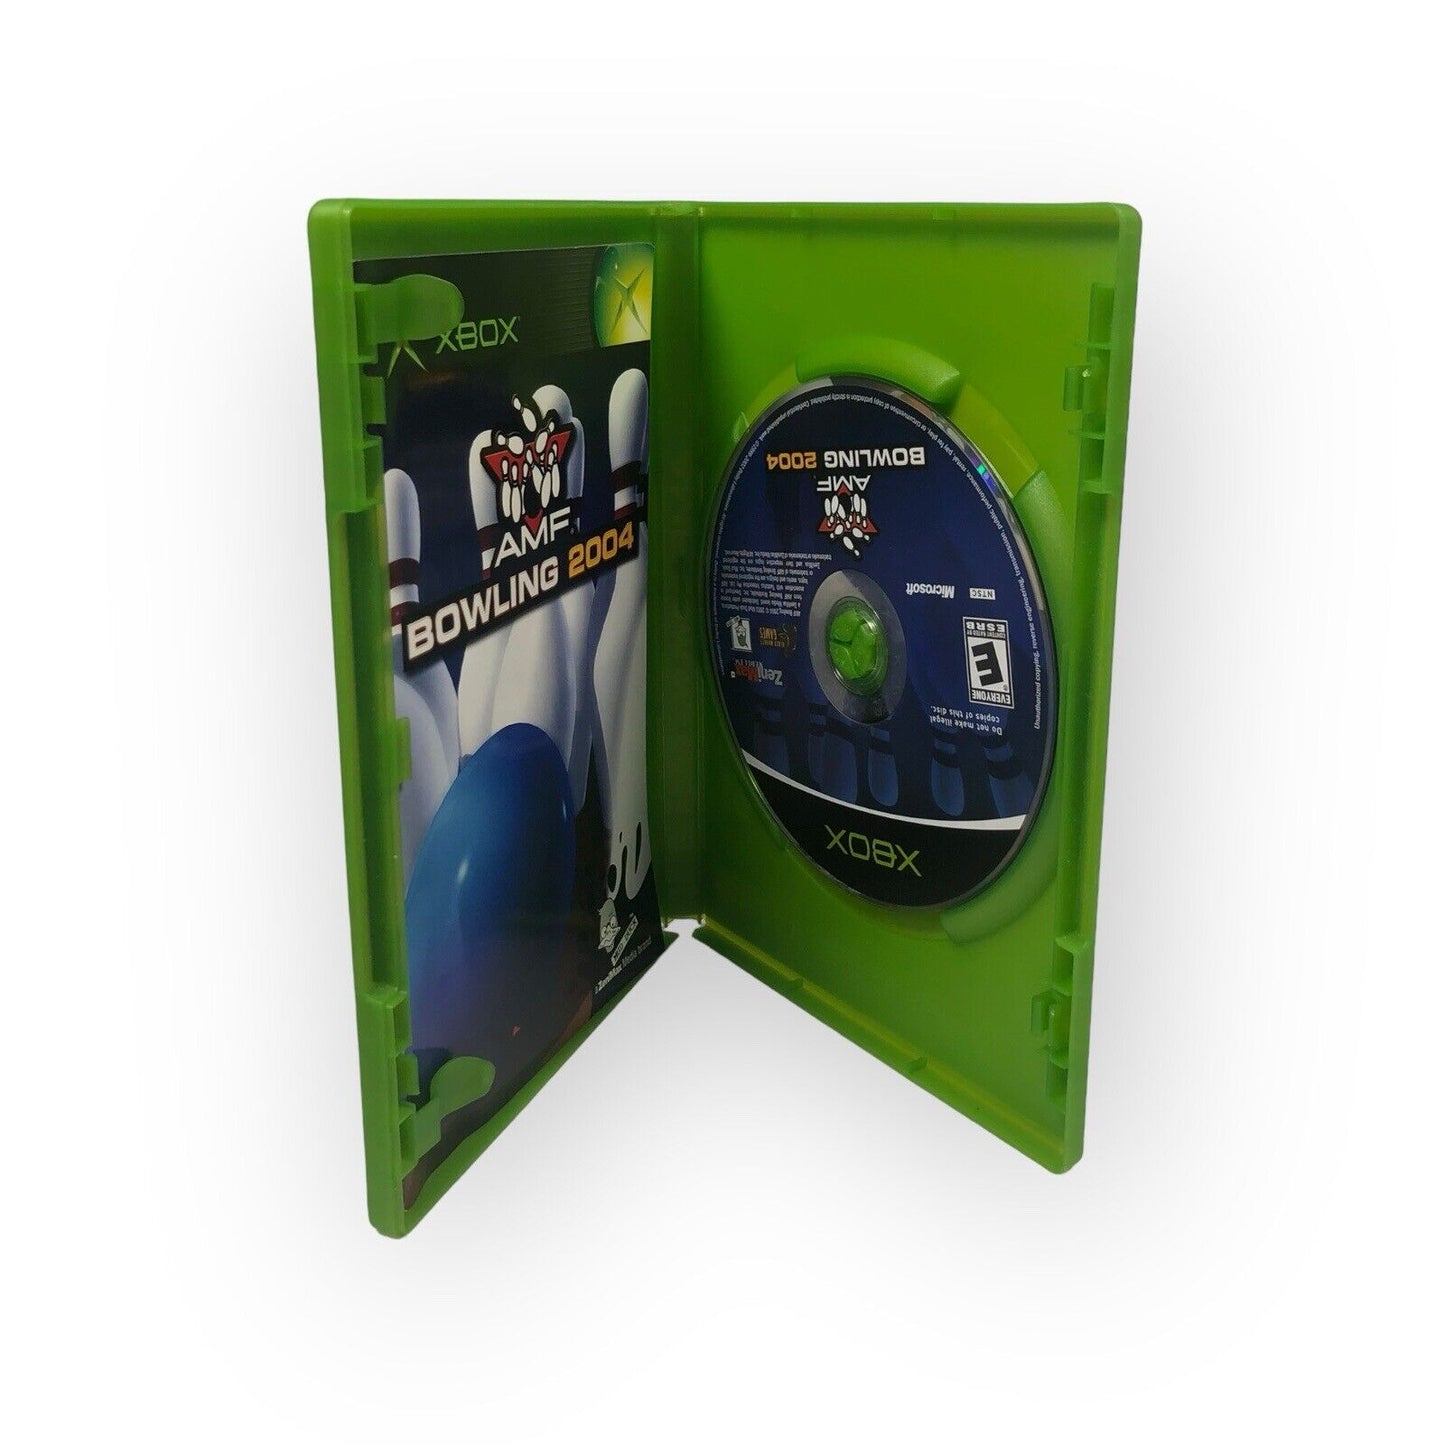 AMF Bowling 2004 (Microsoft Xbox, 2004) Complete CIB w/ Manual